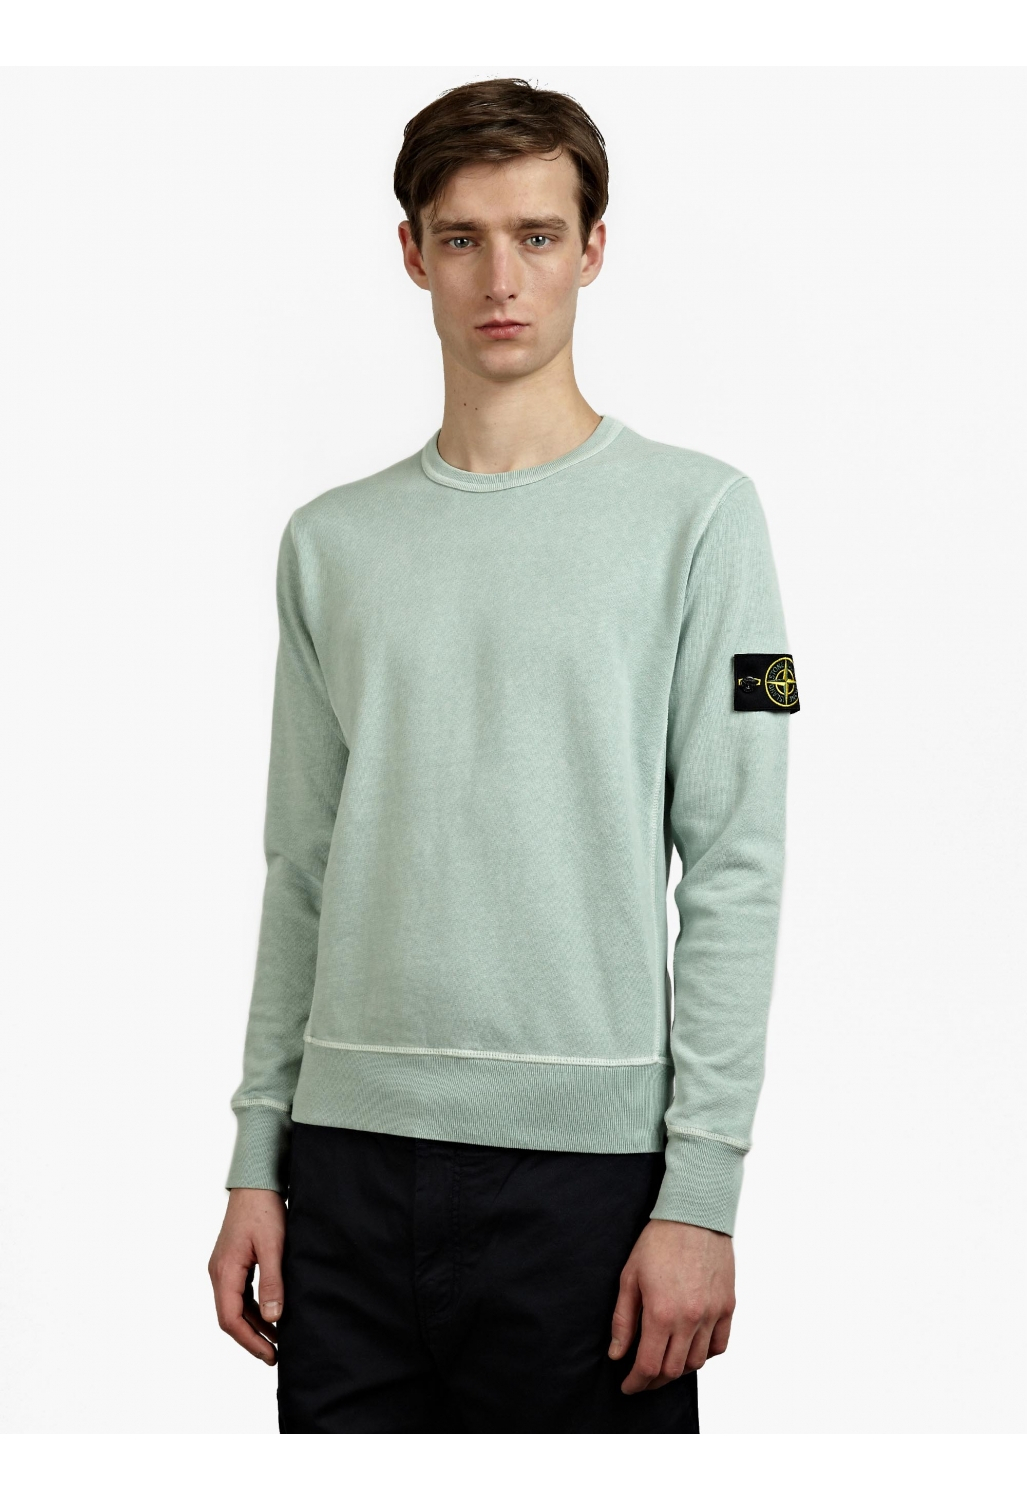 Stone island Men’S Sky Cotton Sweatshirt in Green for Men | Lyst